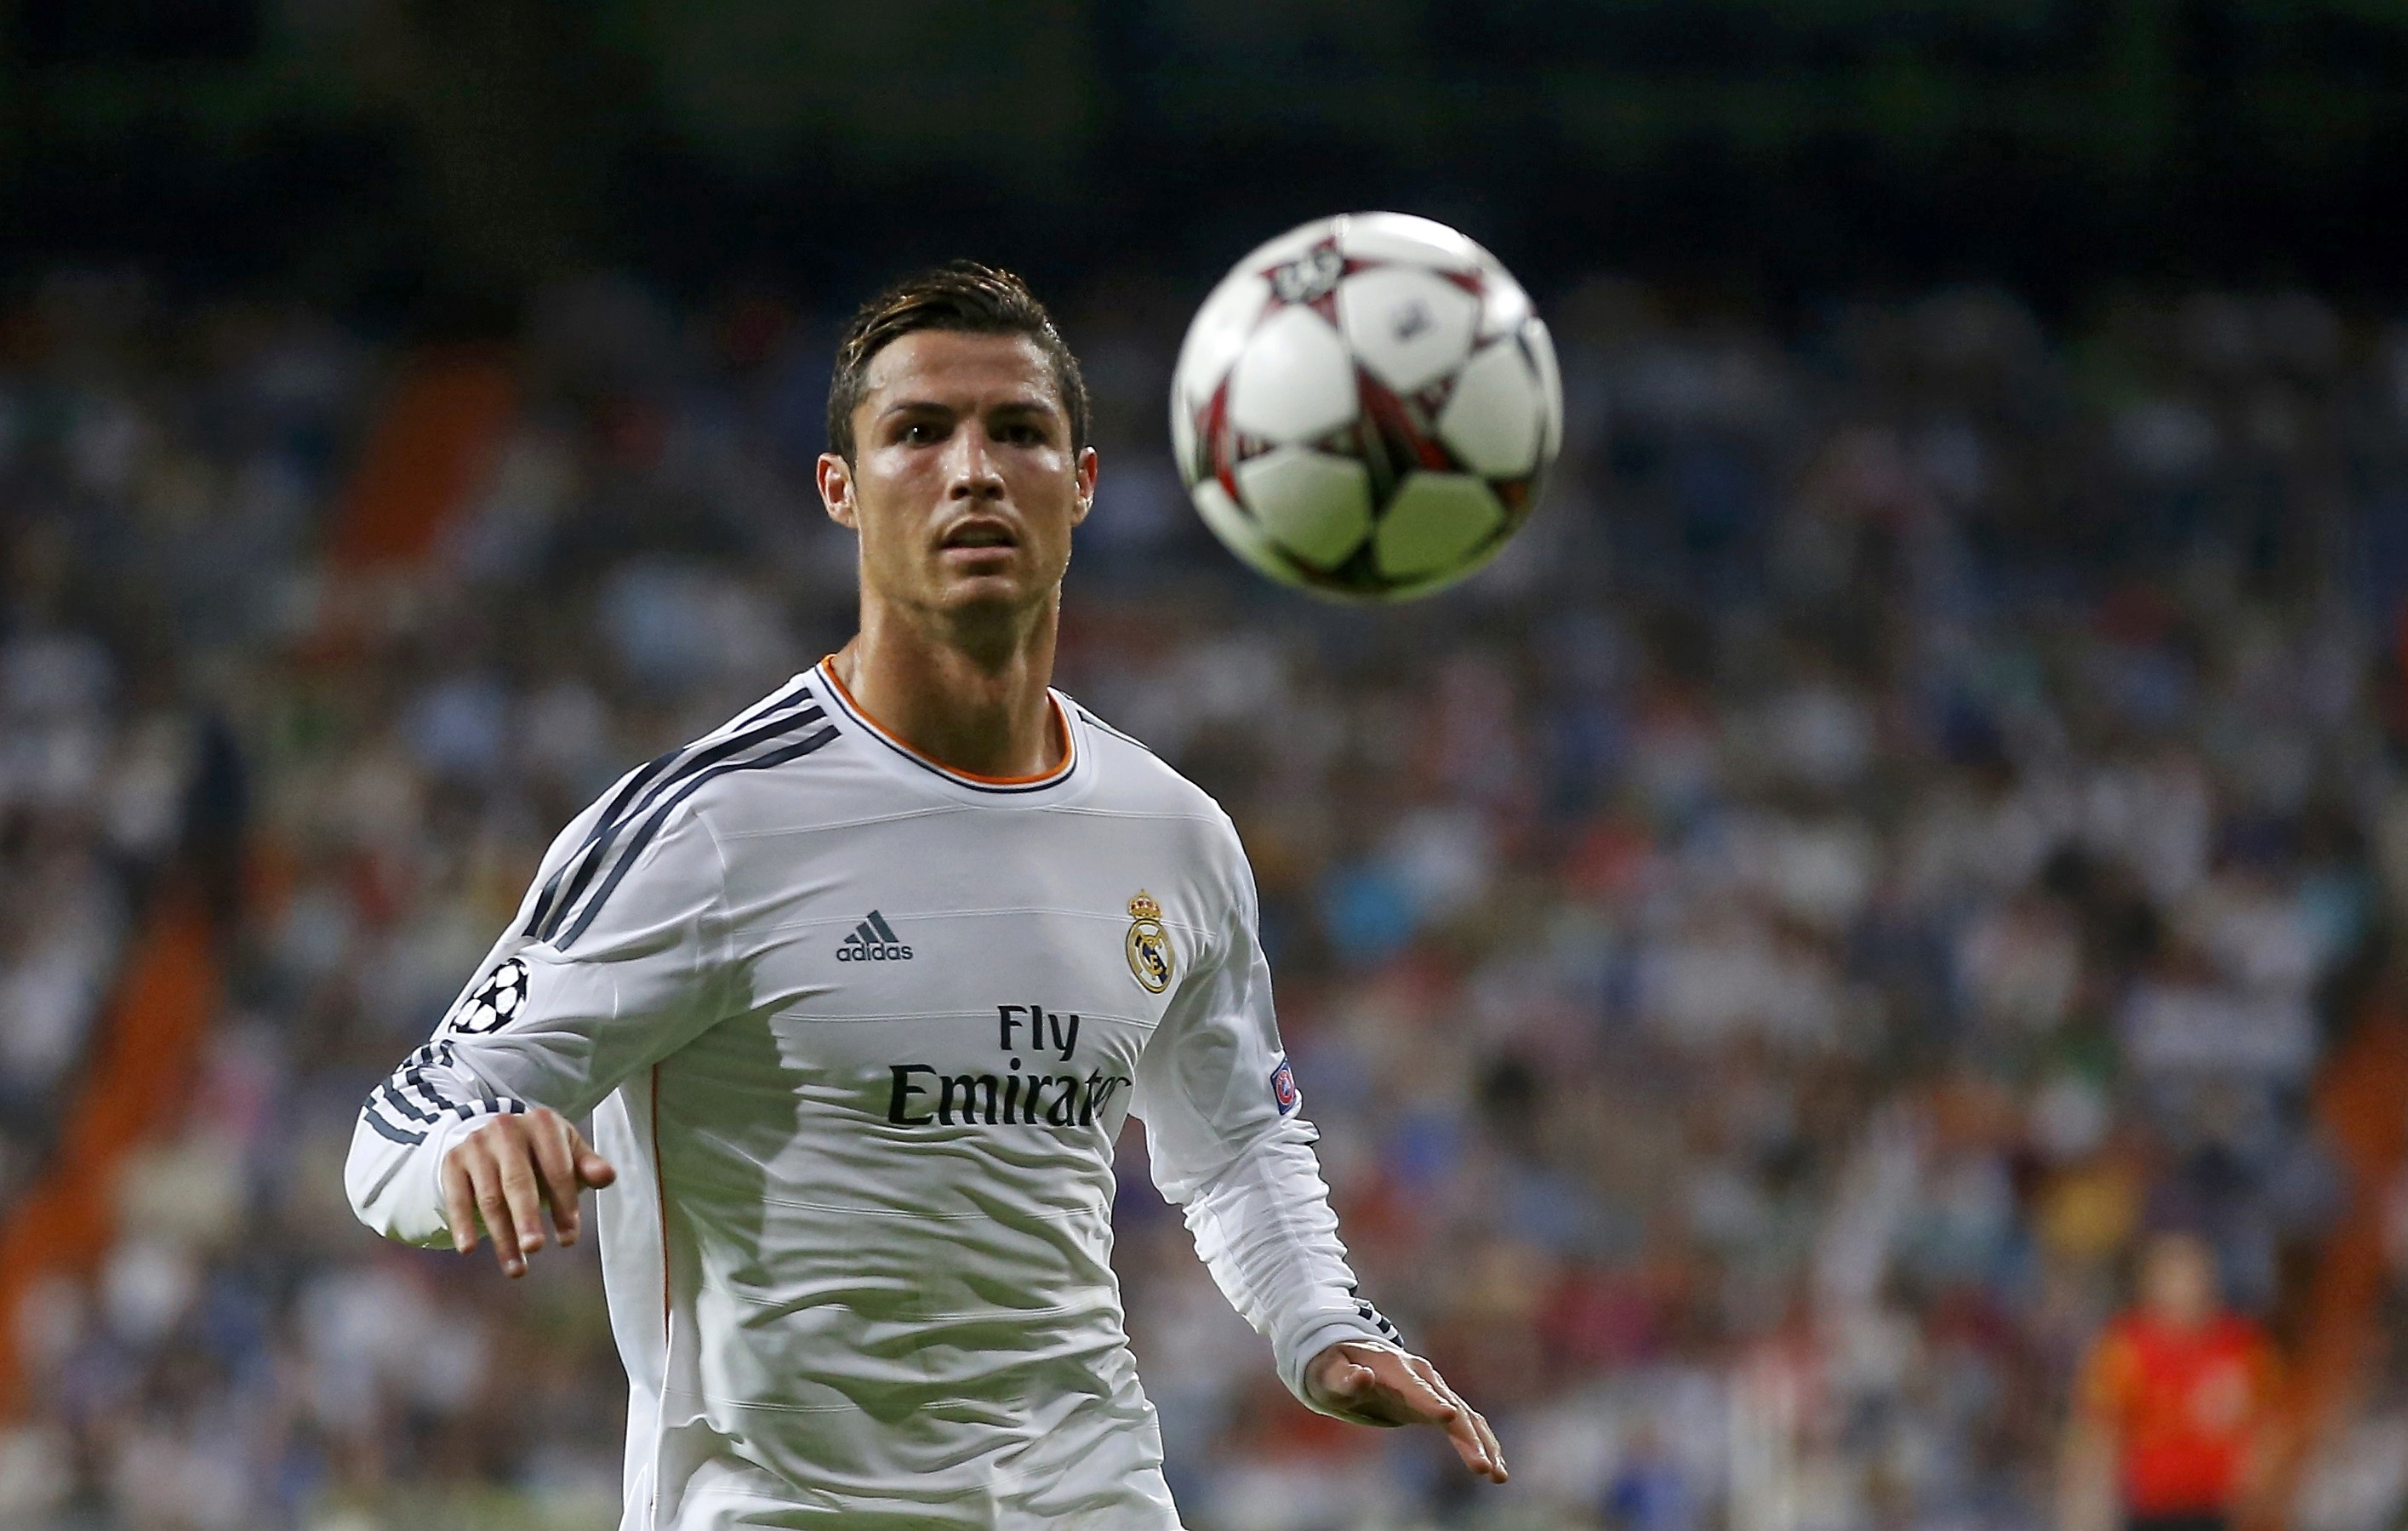 Ronaldo scored two goals in the rout of Copenhagen. Photo: Reuters